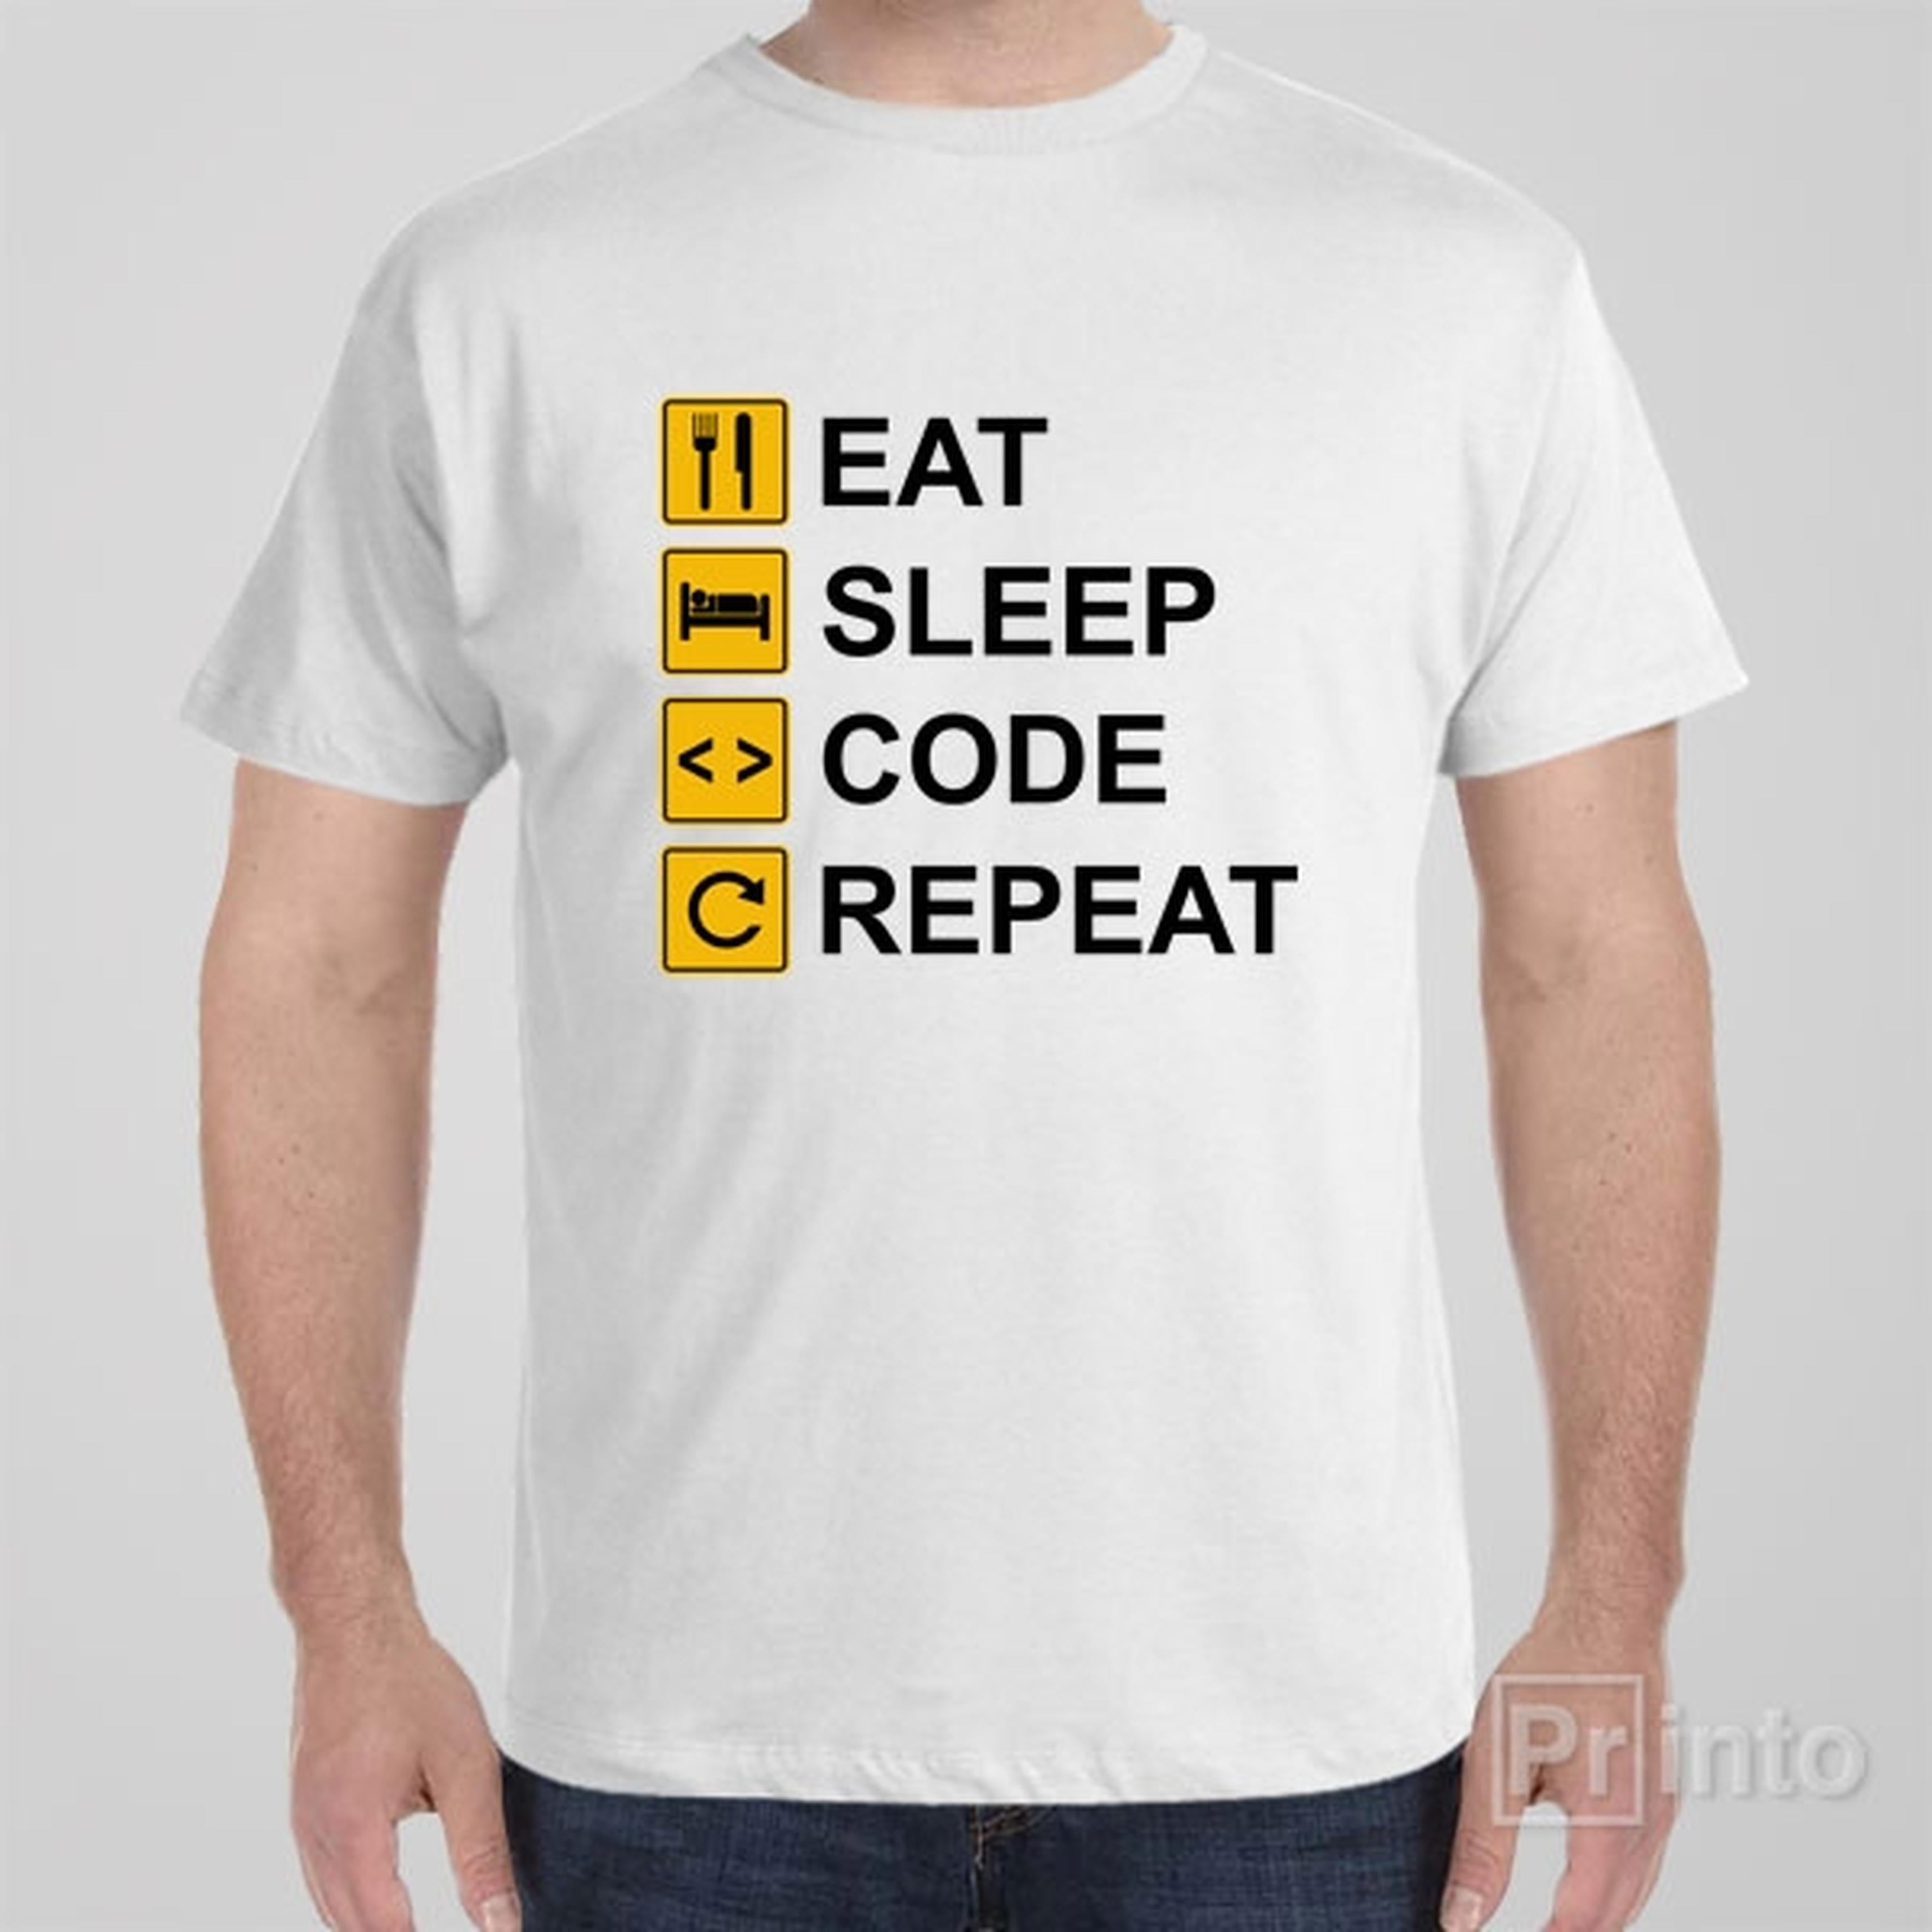 eat-sleep-code-repeat-t-shirt